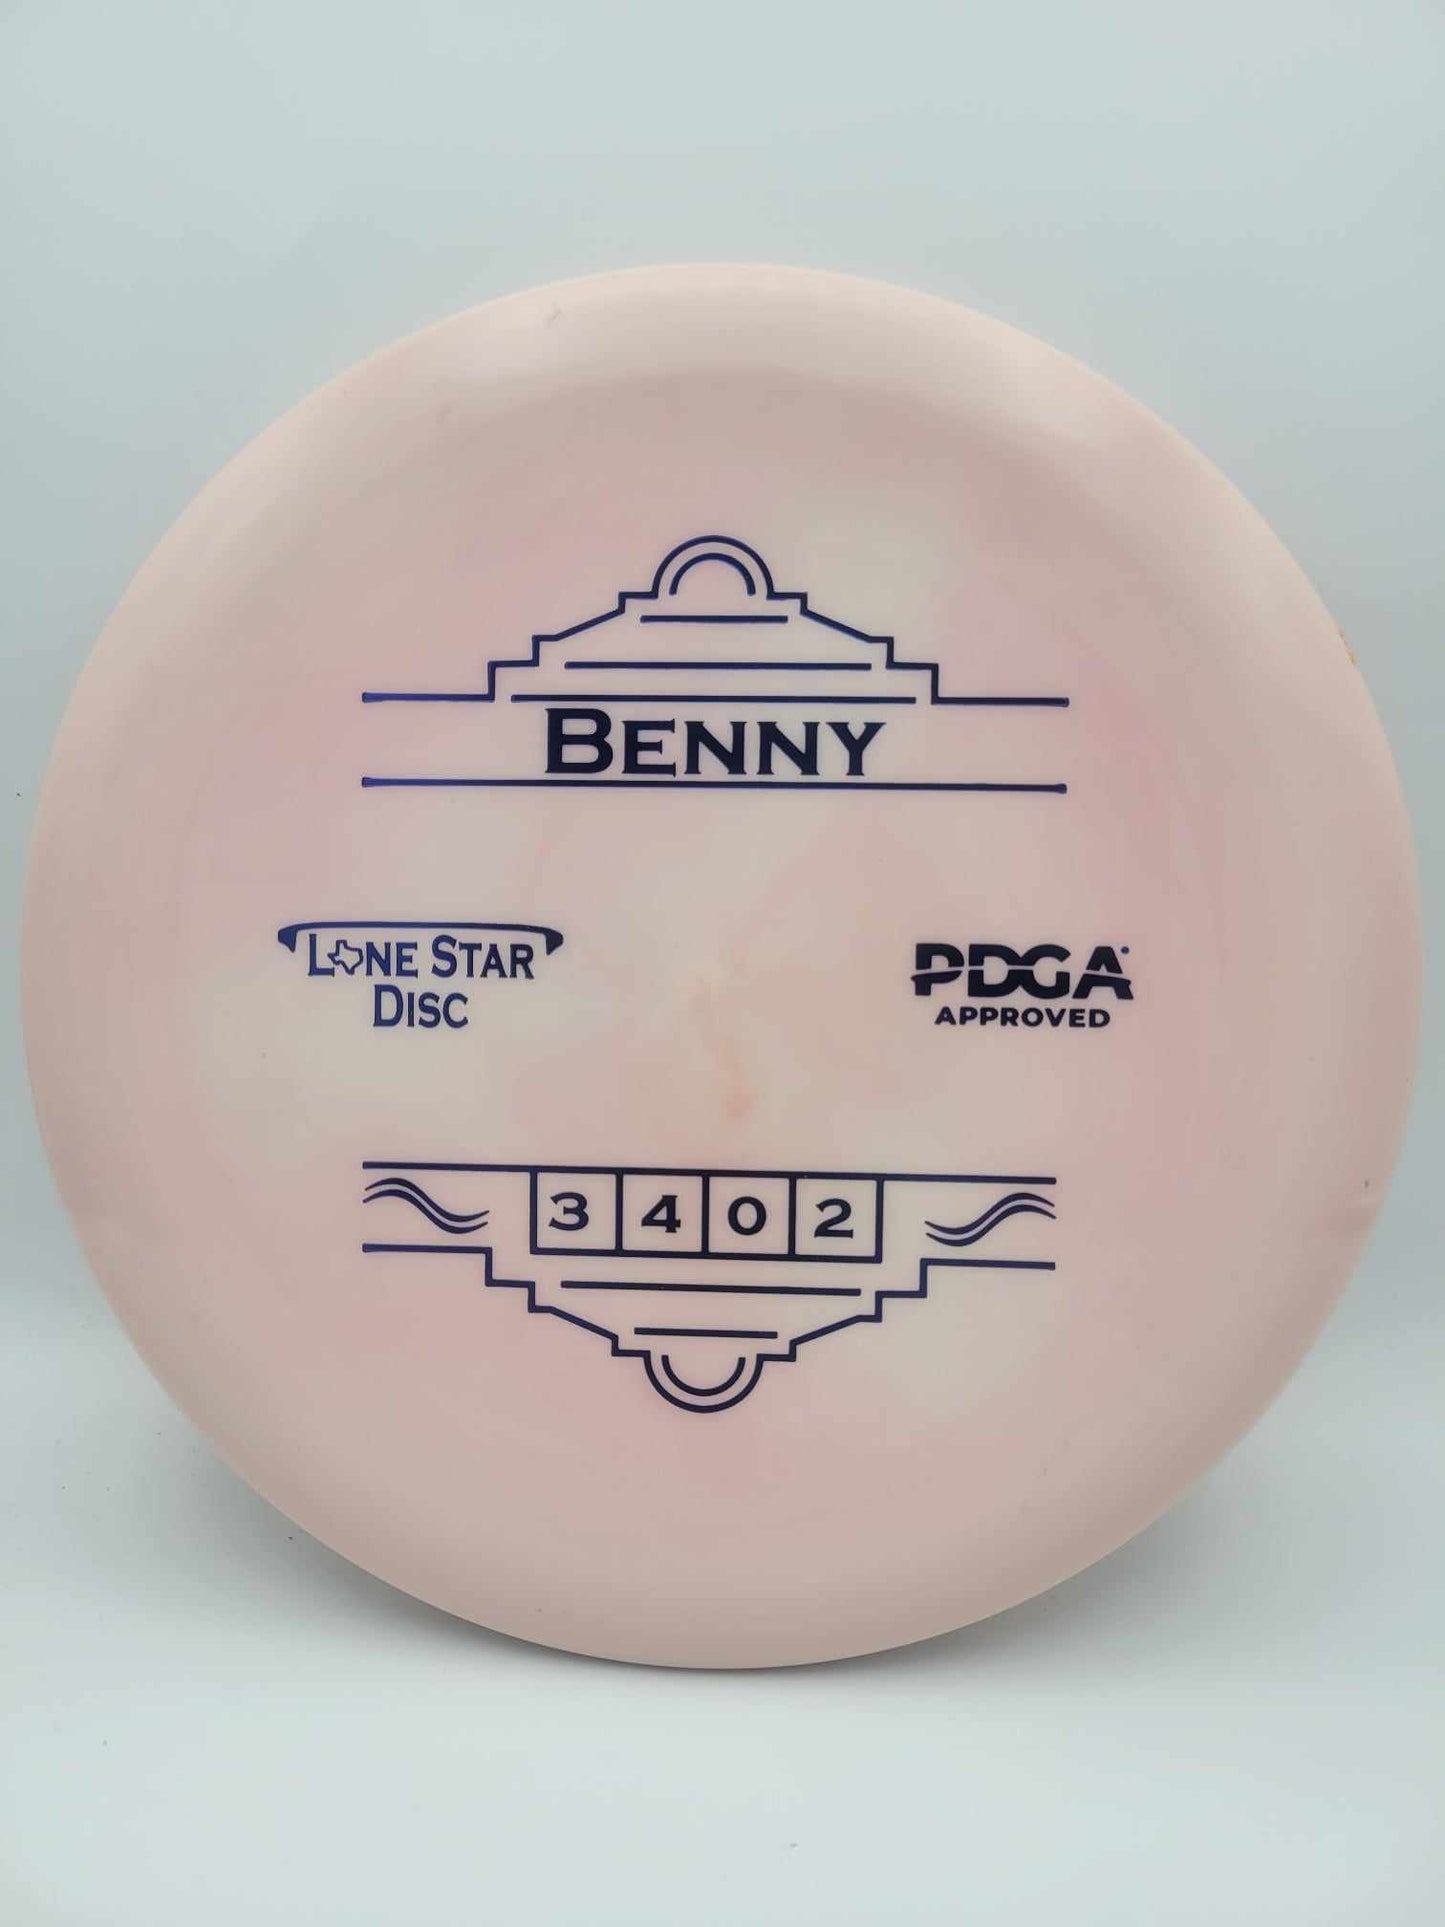 Benny (Bravo) 3/4/0/2